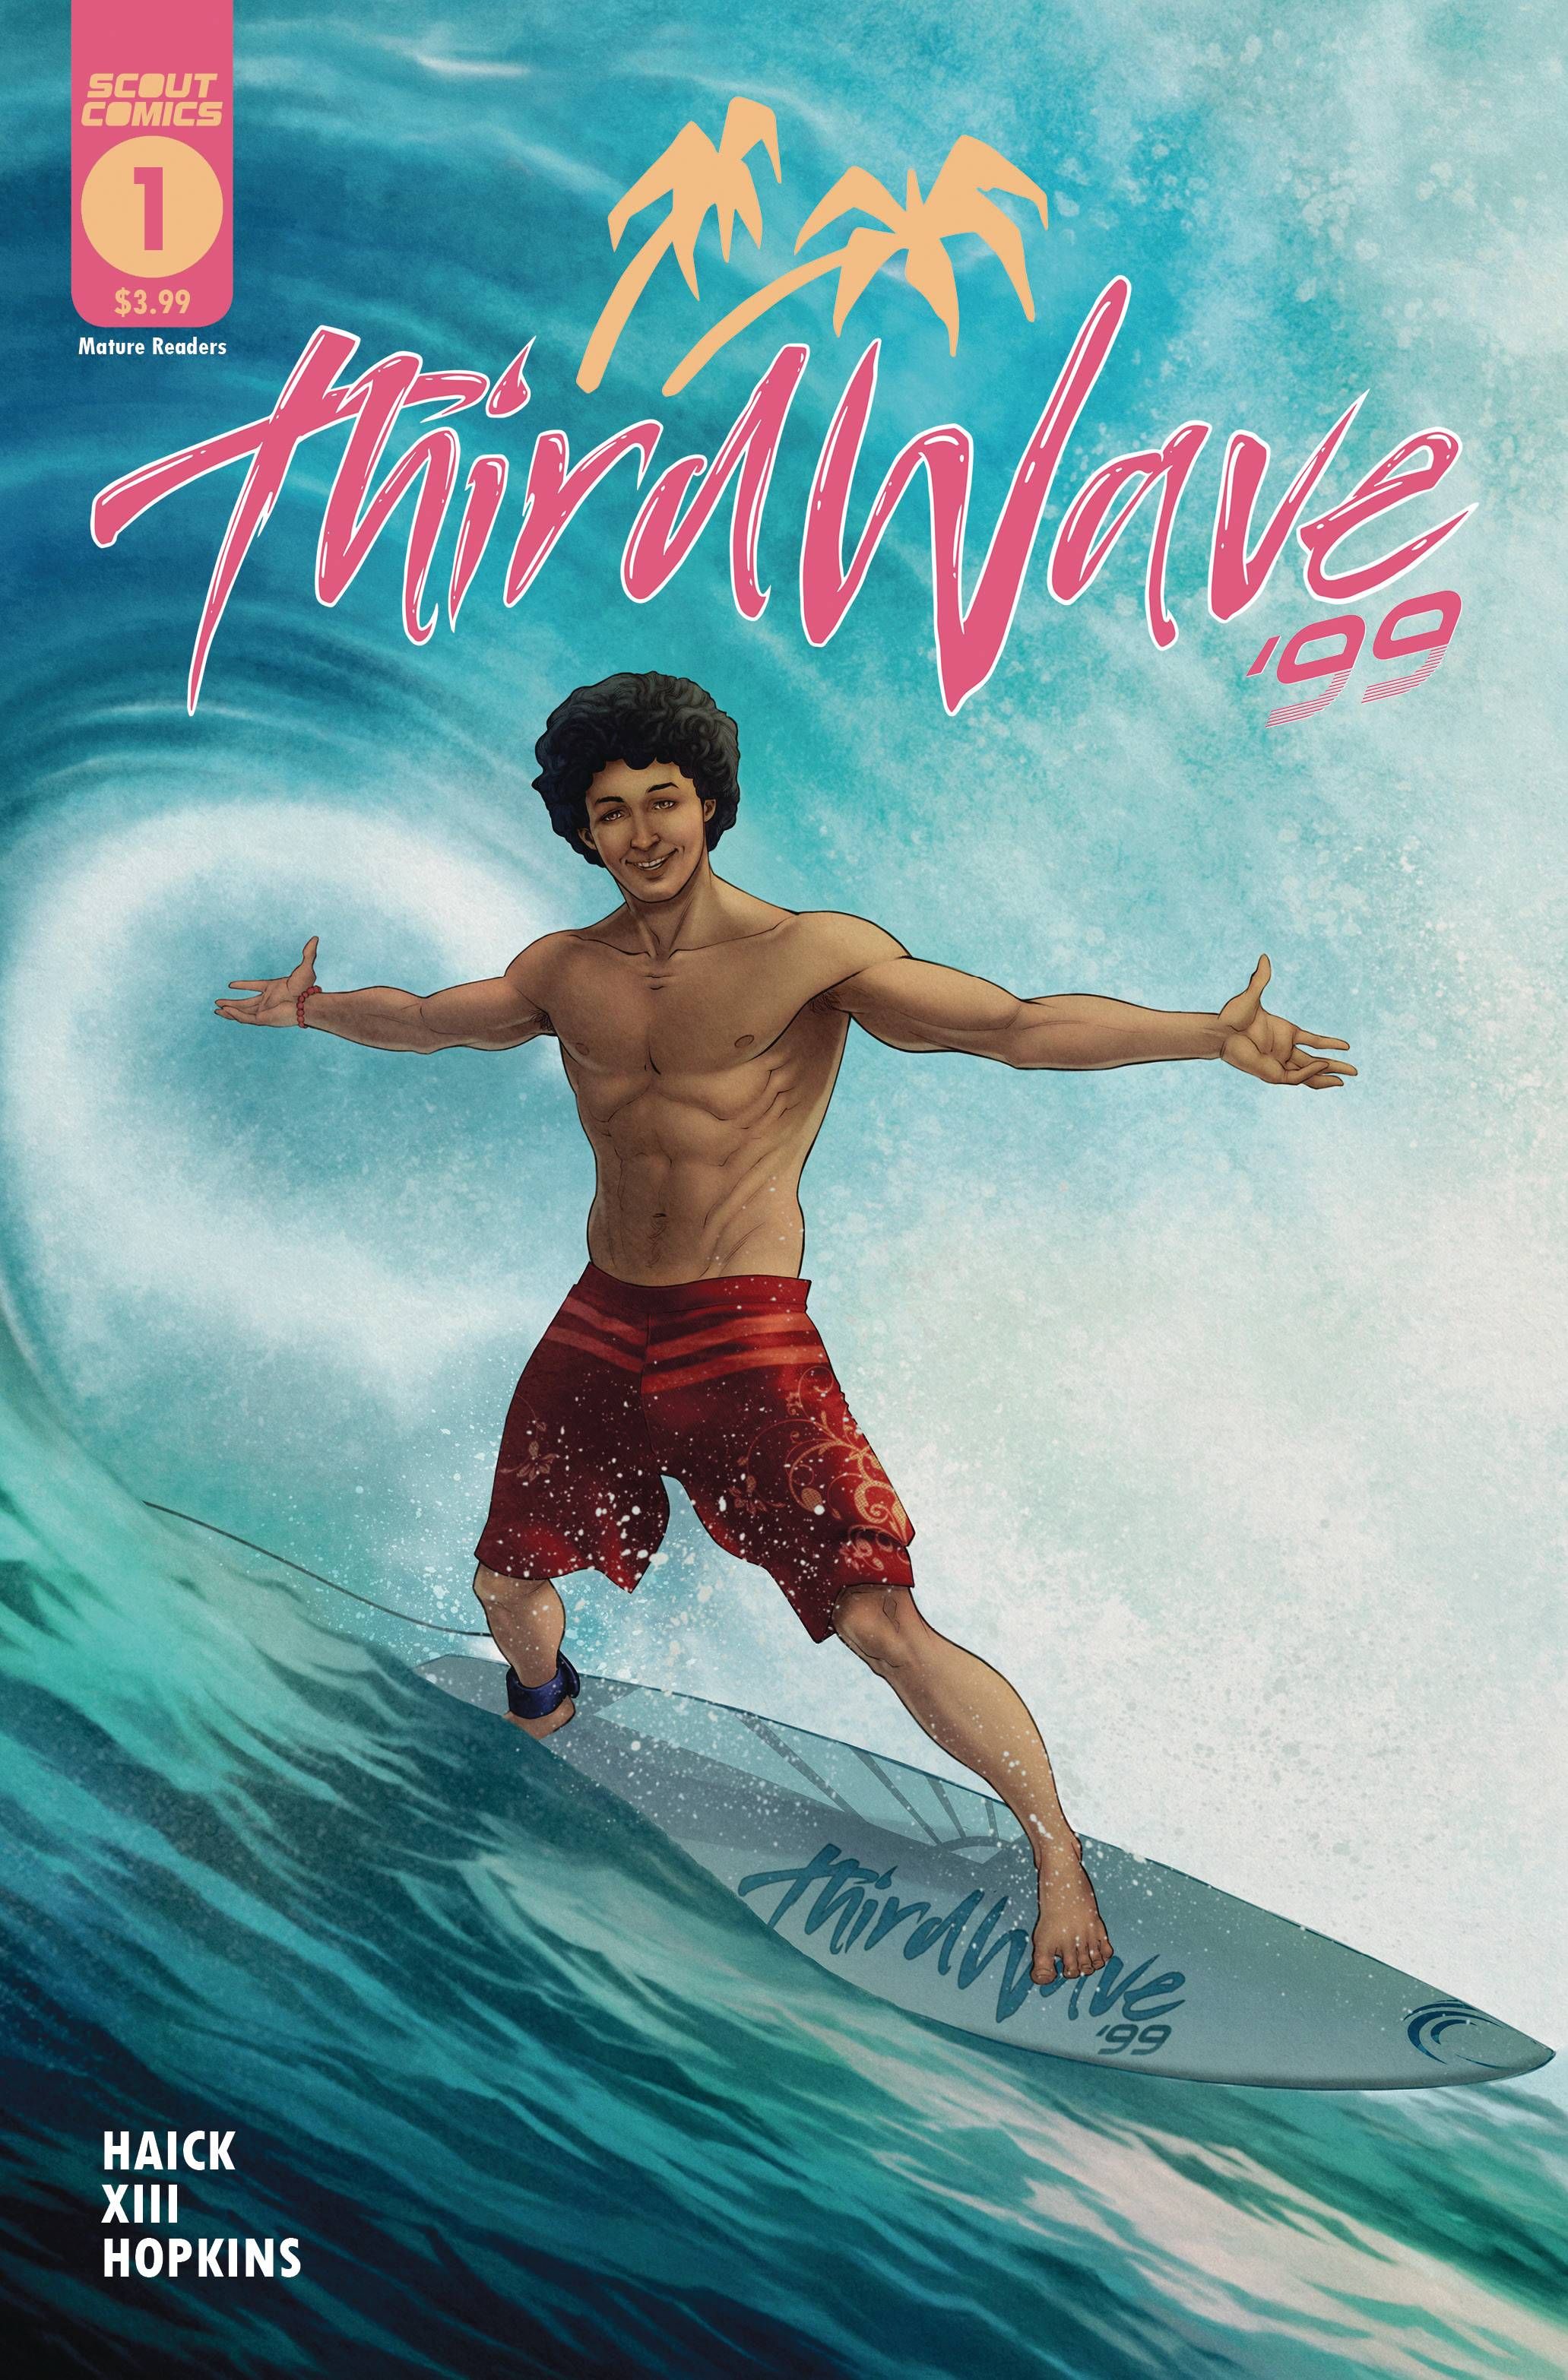 Third Wave 99 #1 Comic